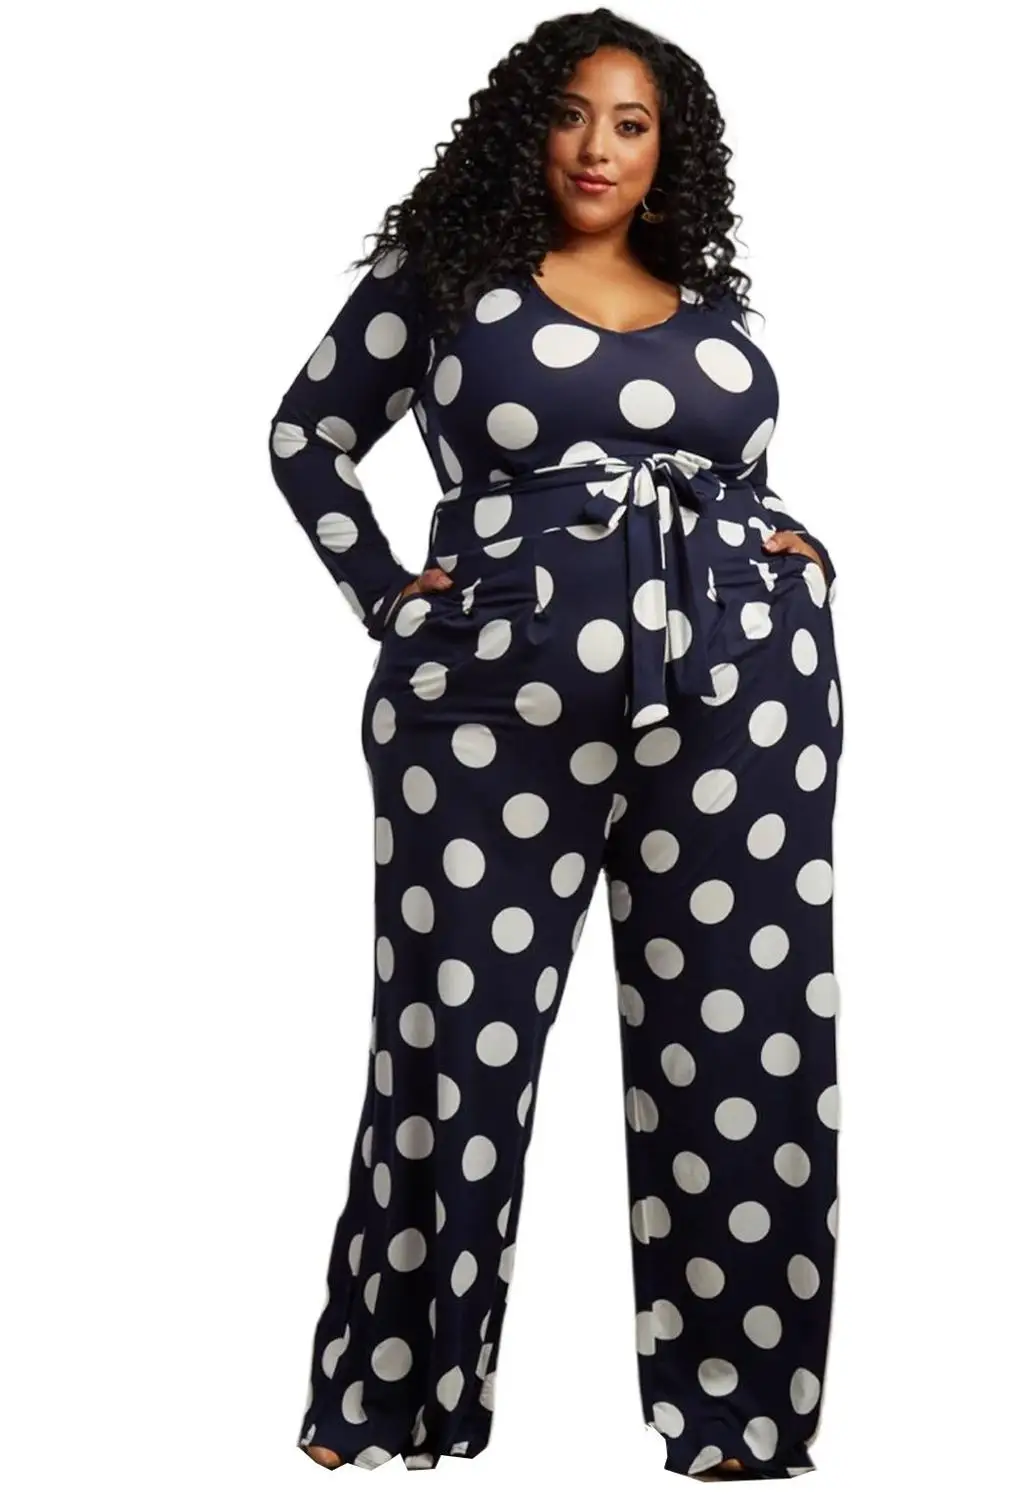 Cute Polka Dot Jumpsuit - Navy Blue Jumpsuit - $49.00 - Lulus